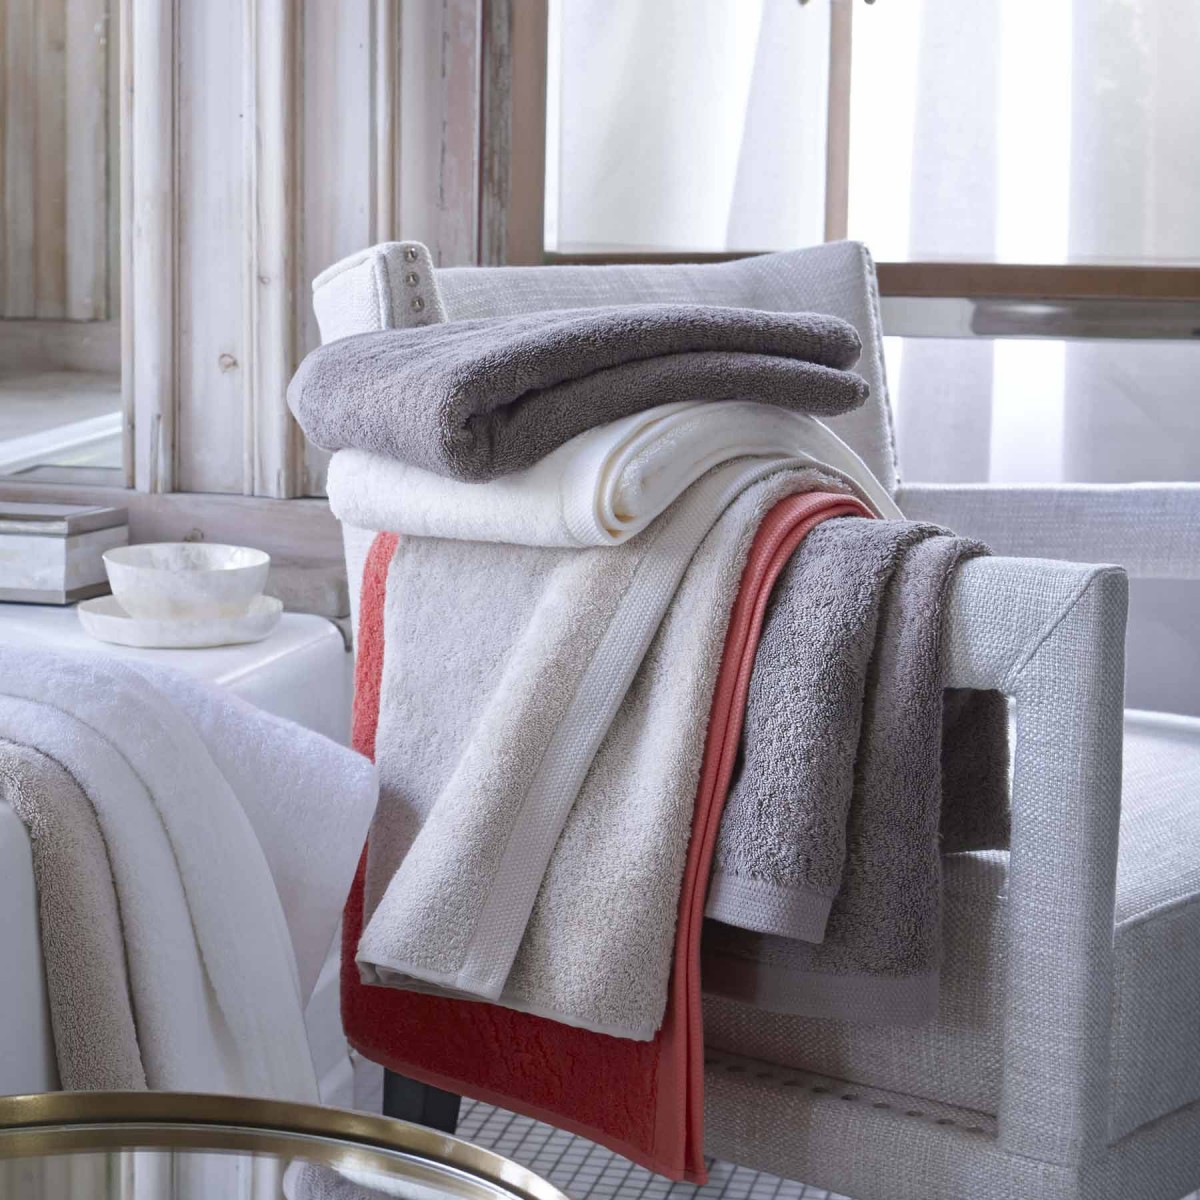 Organic cotton bath towels